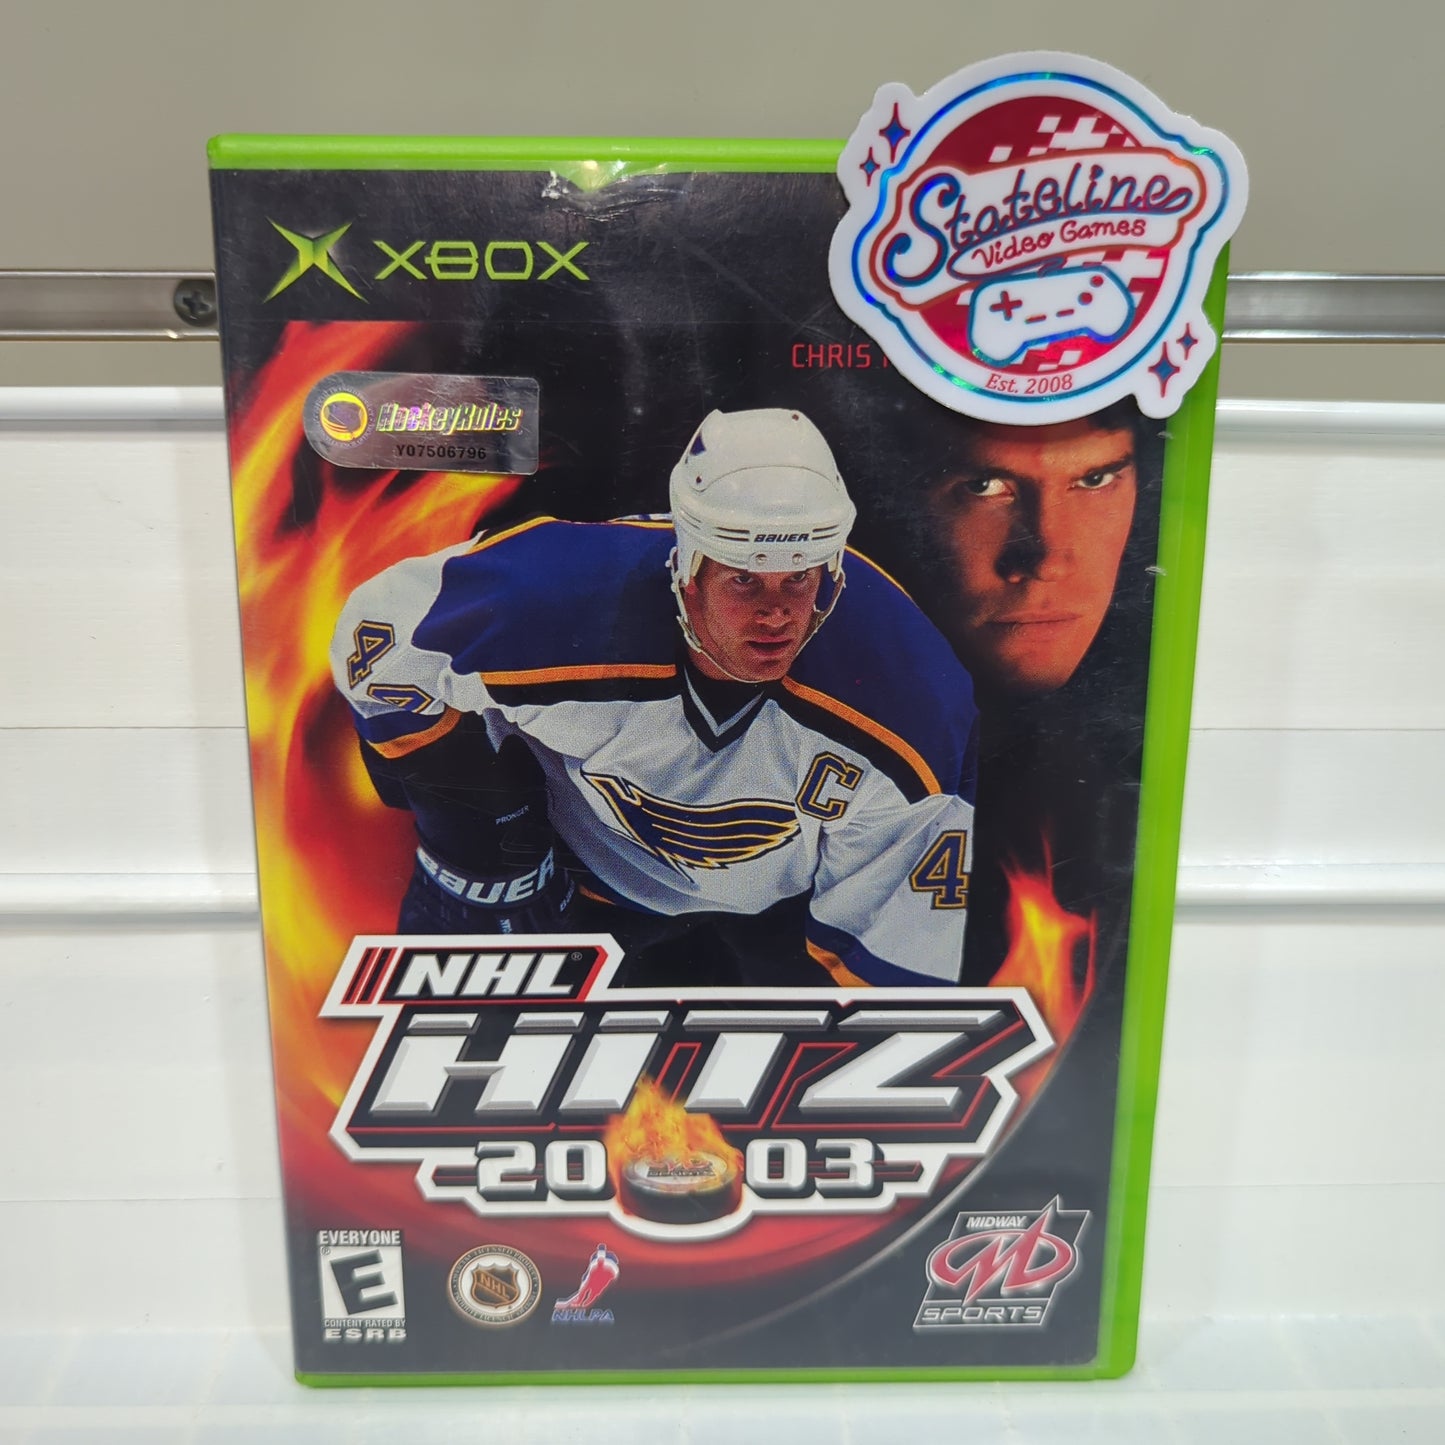 NHL Hitz 2003 - Xbox